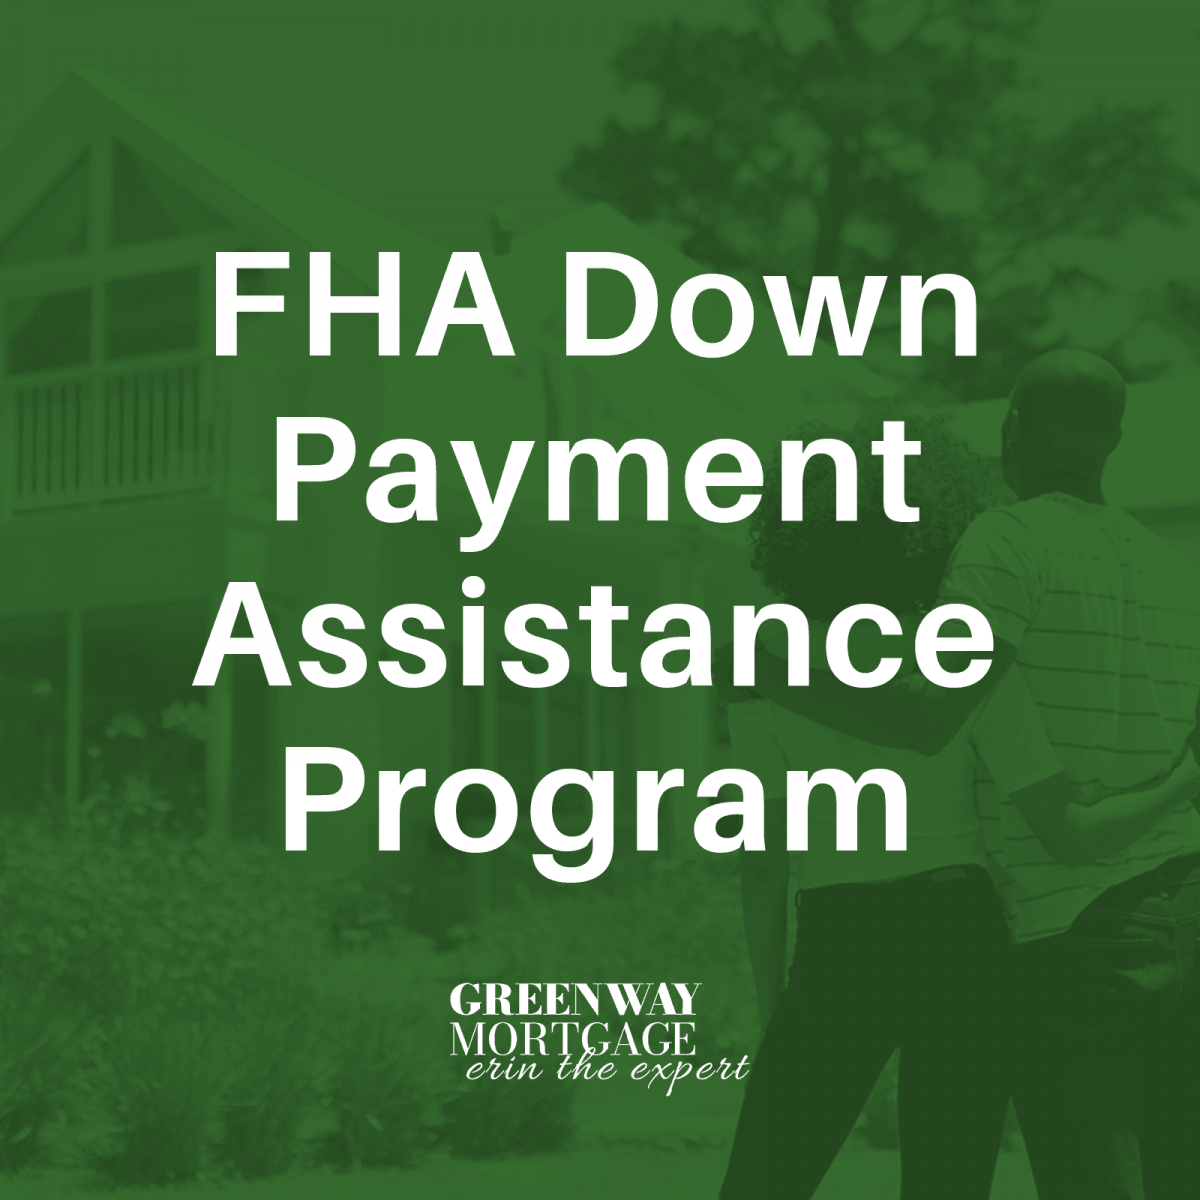 FHA down payment assistance program 